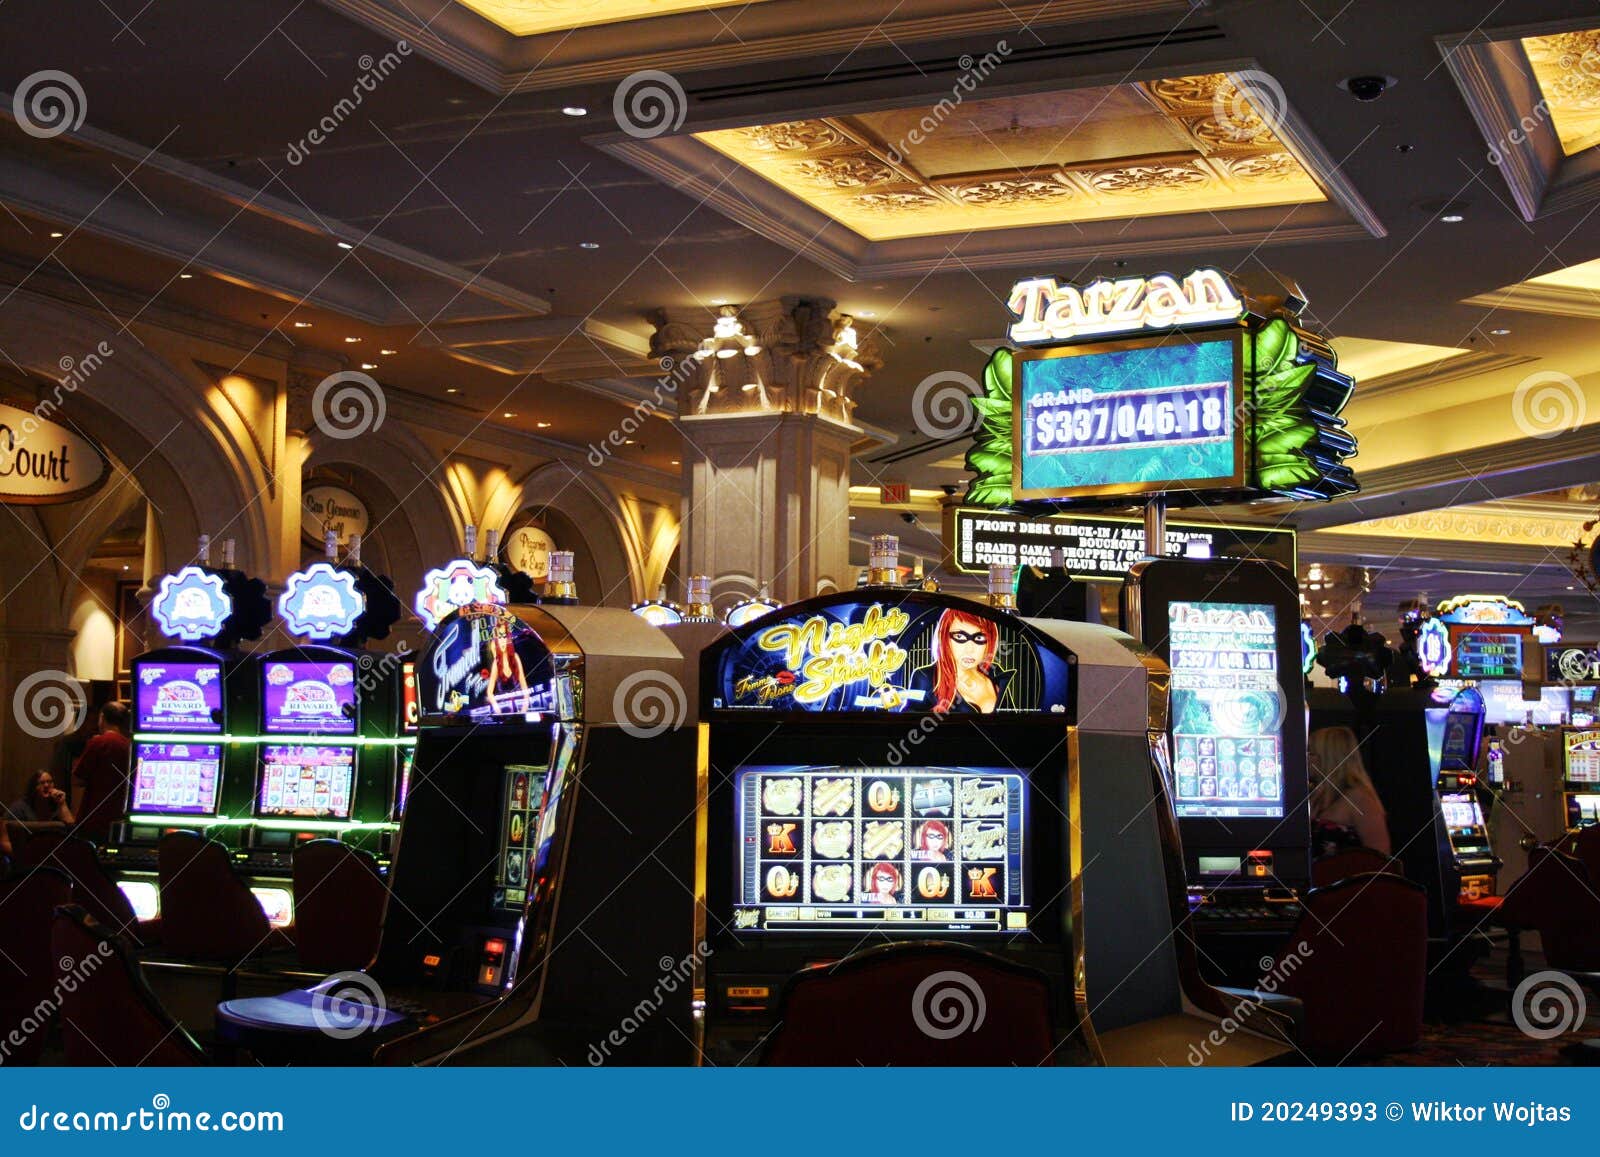 Secrets About Casino Slot Machines